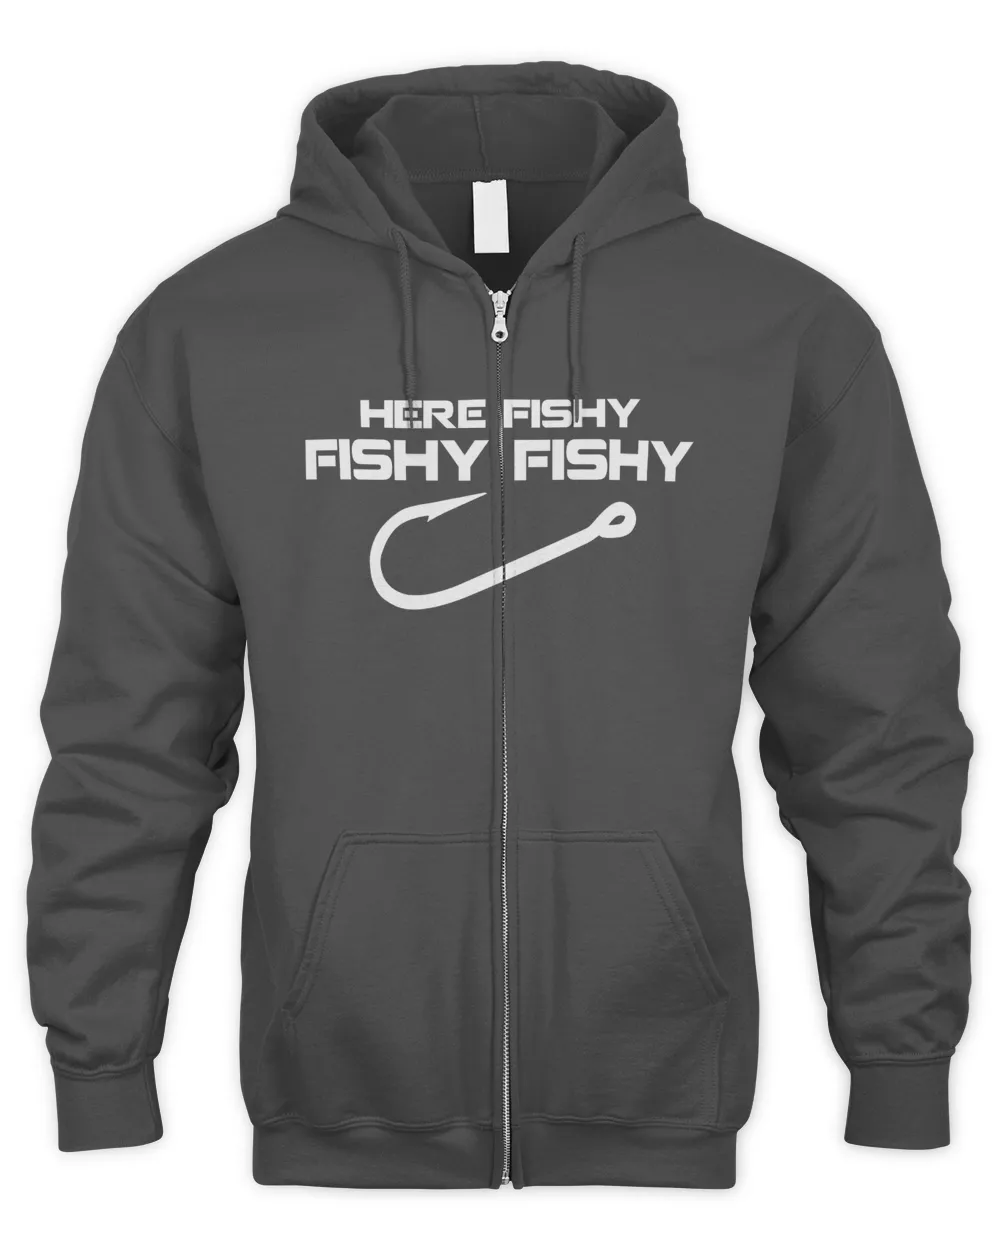 Funny Fishing Shirts Here Fishy Fishy Fishy Shirts